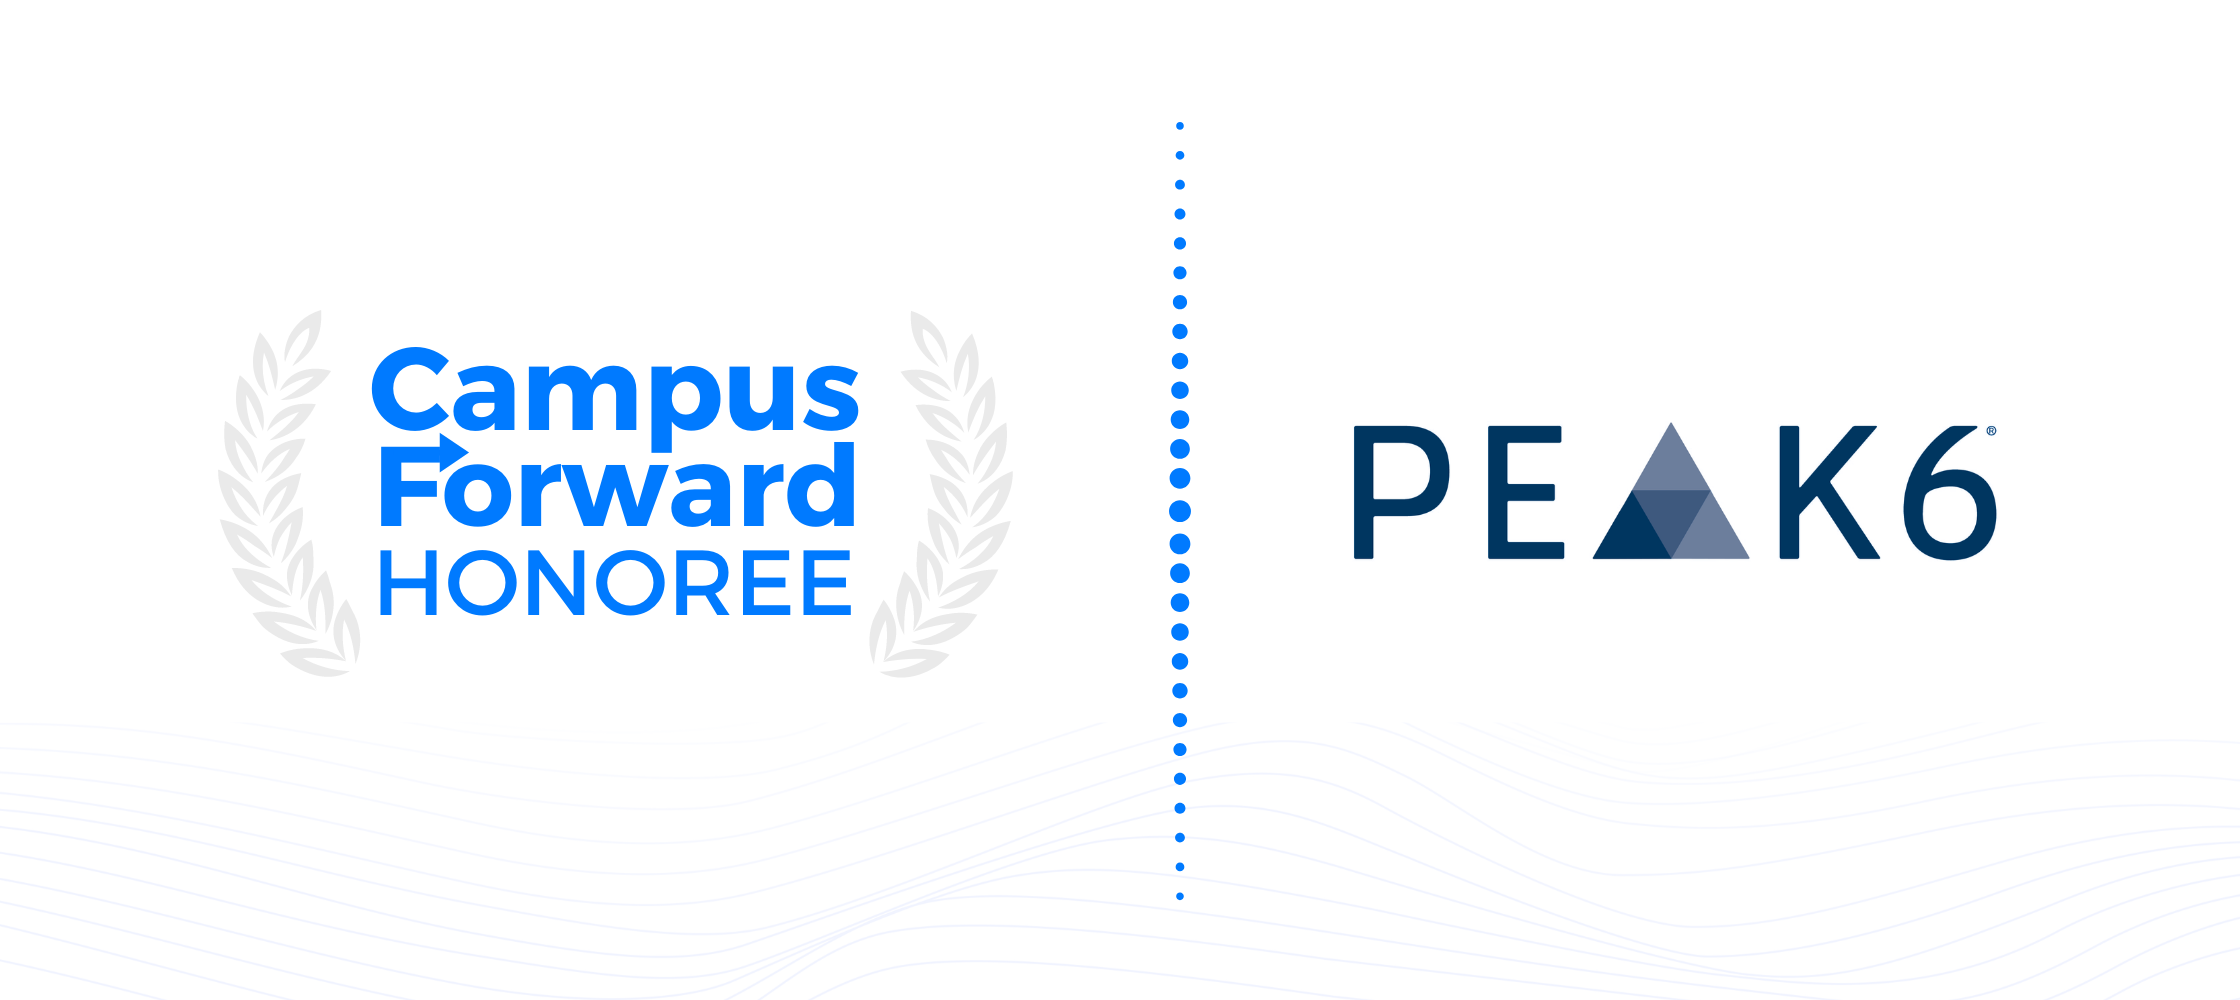 Campus Forward Honoree - PEAK6